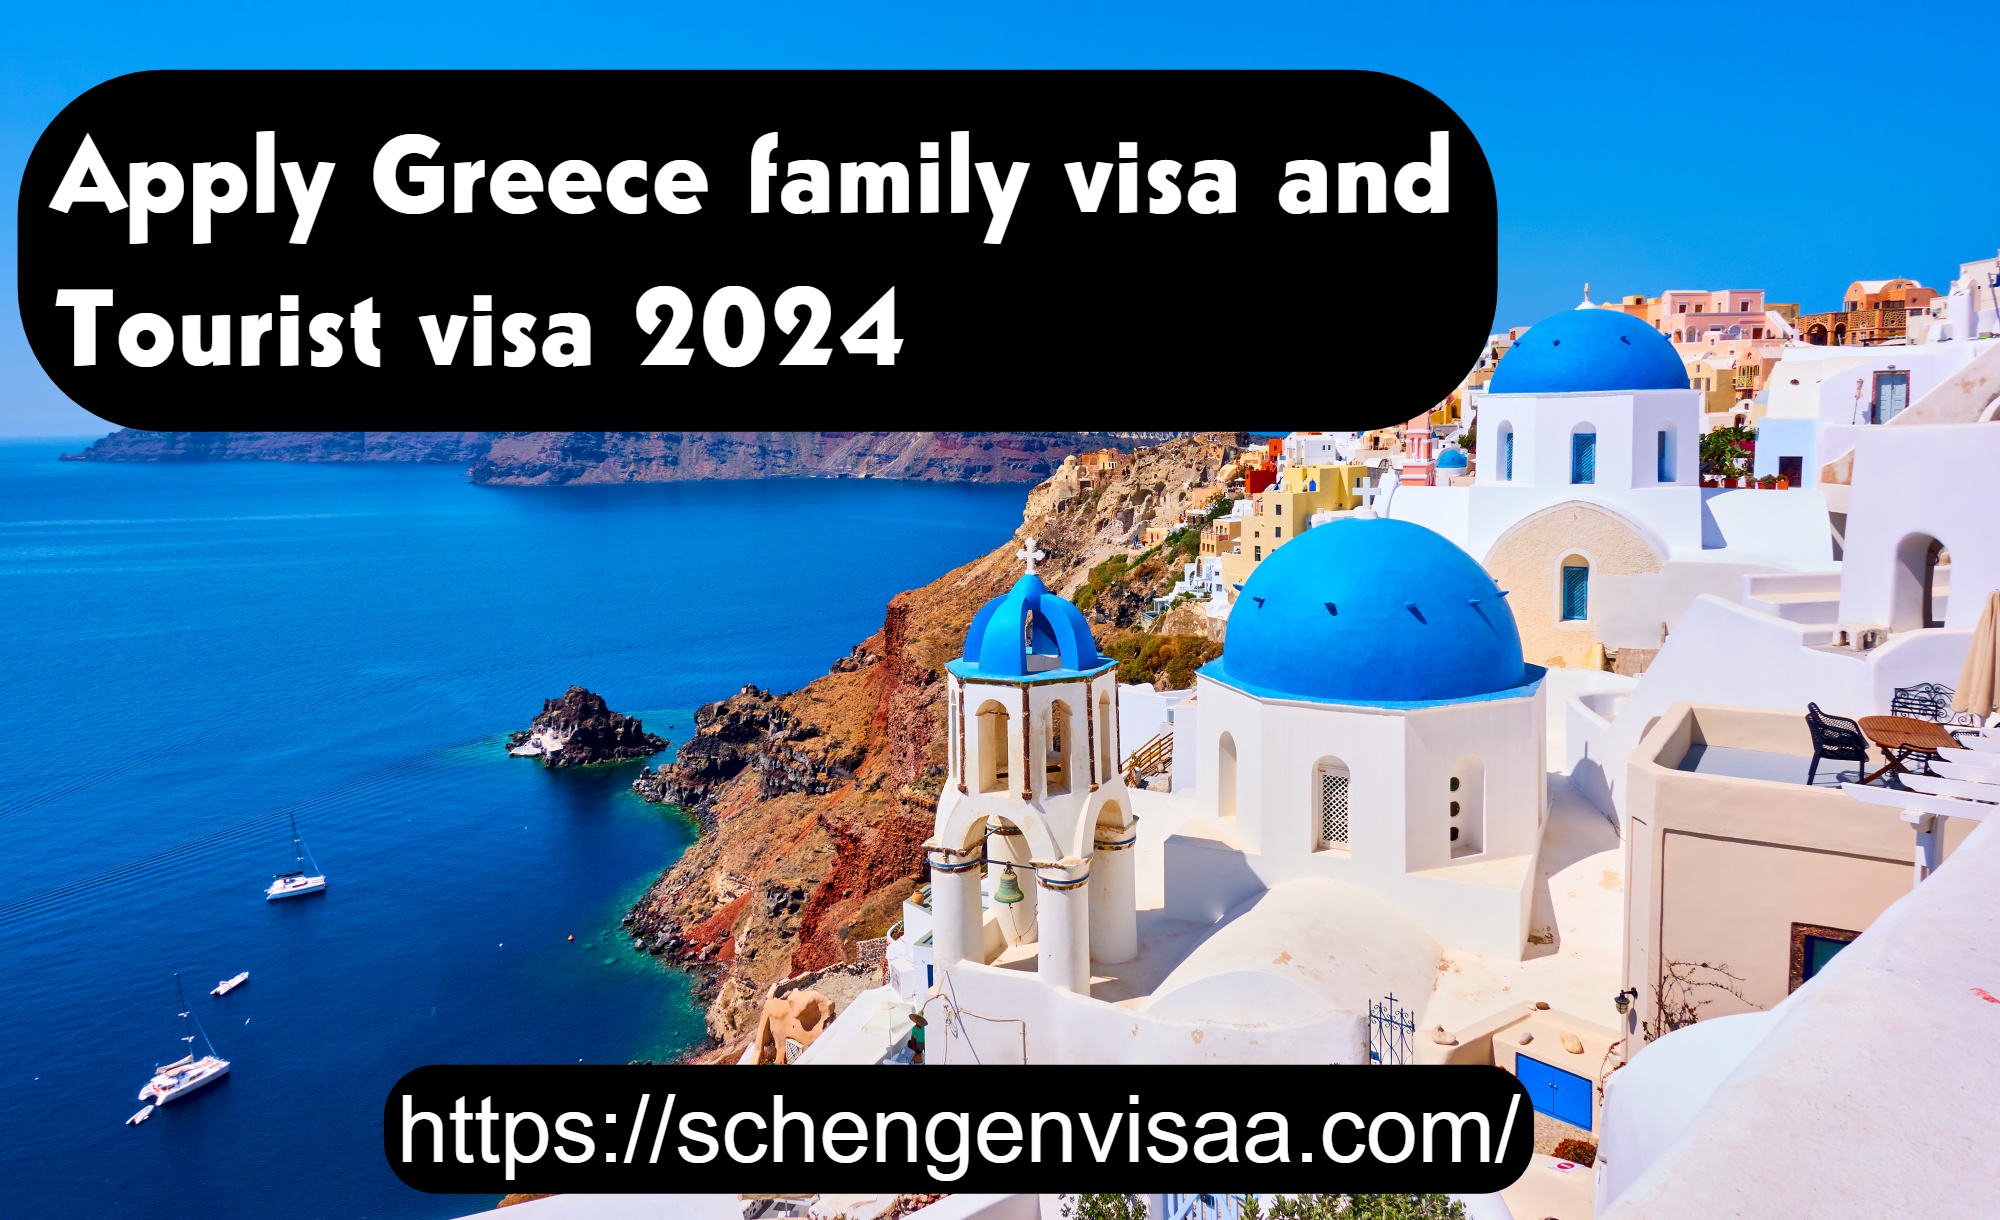 Apply Greece family visa and Tourist visa 2024